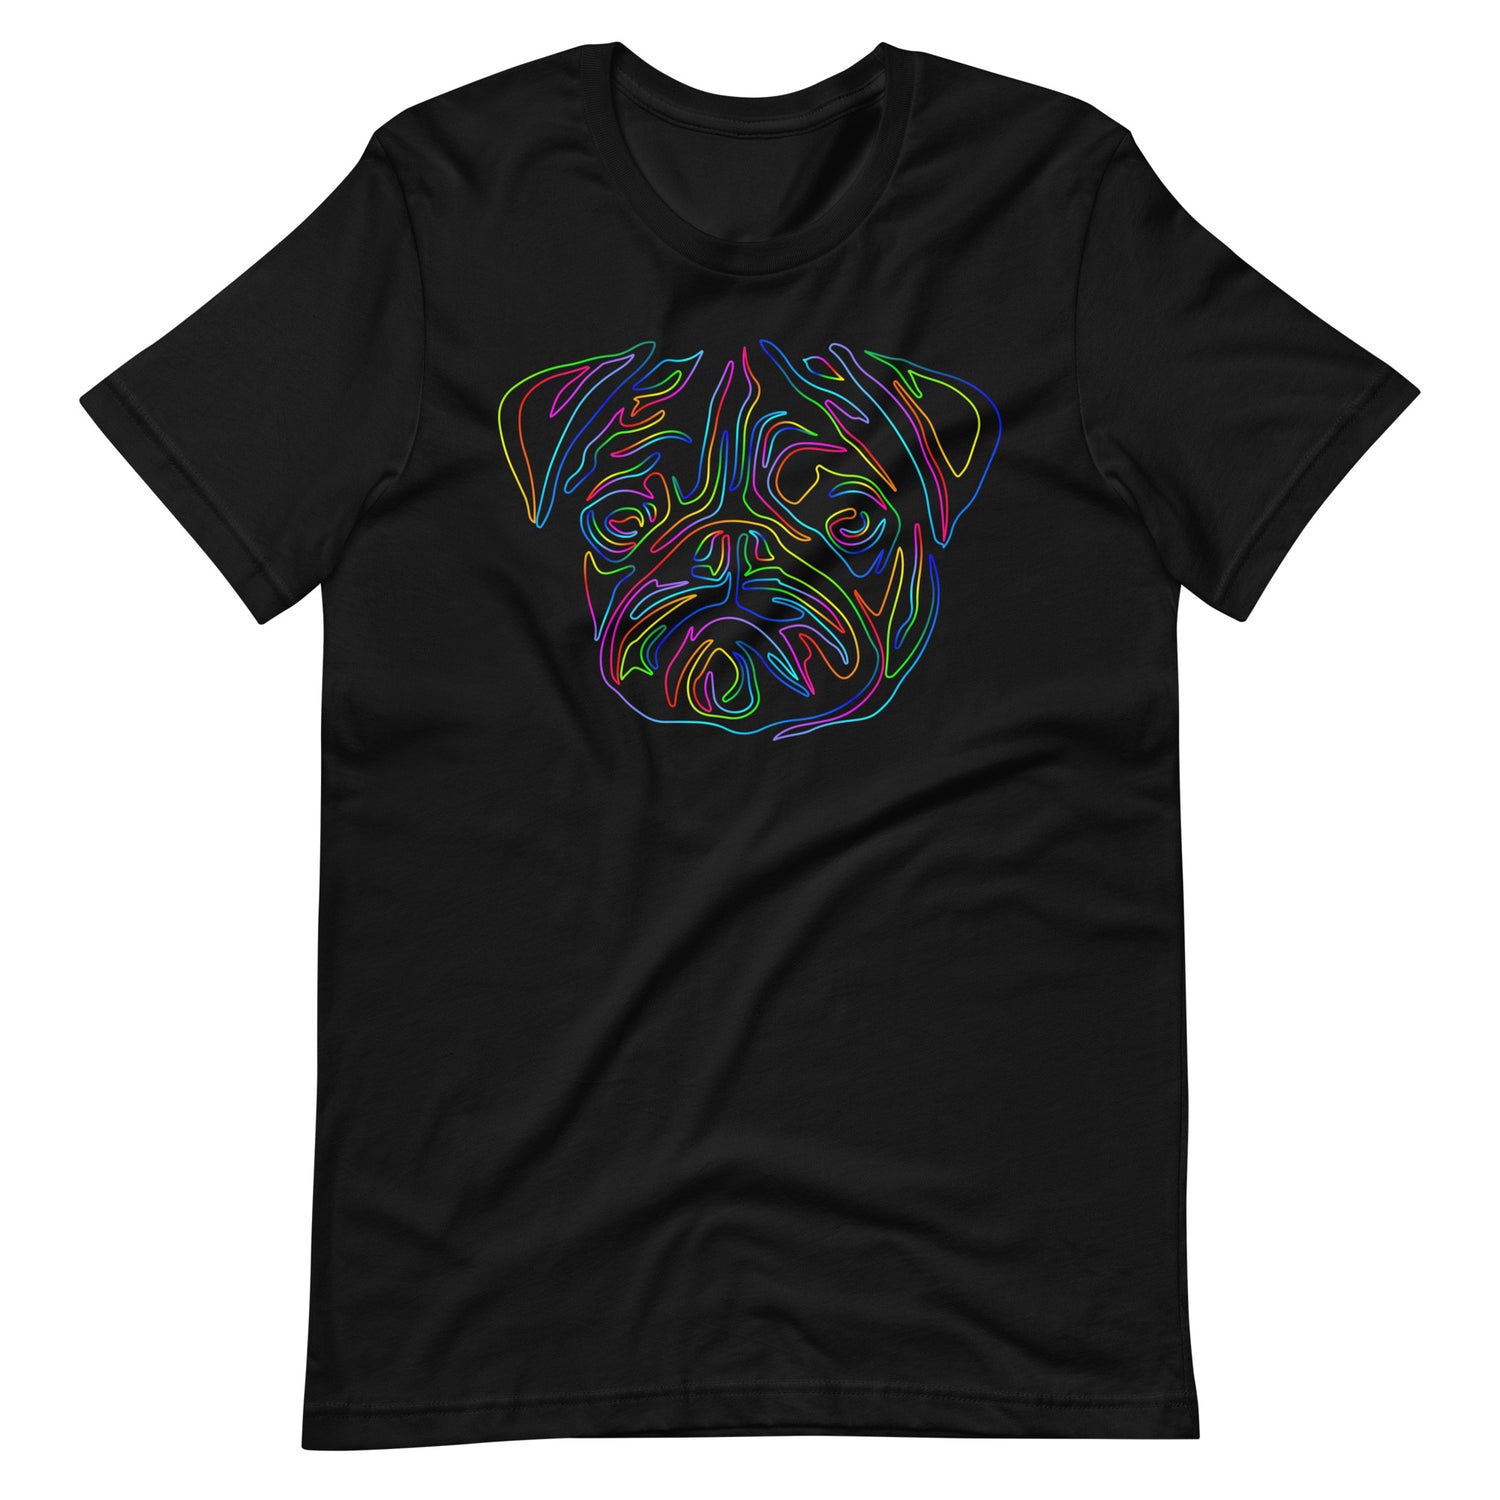 Colored line Pug face on unisex black t-shirt